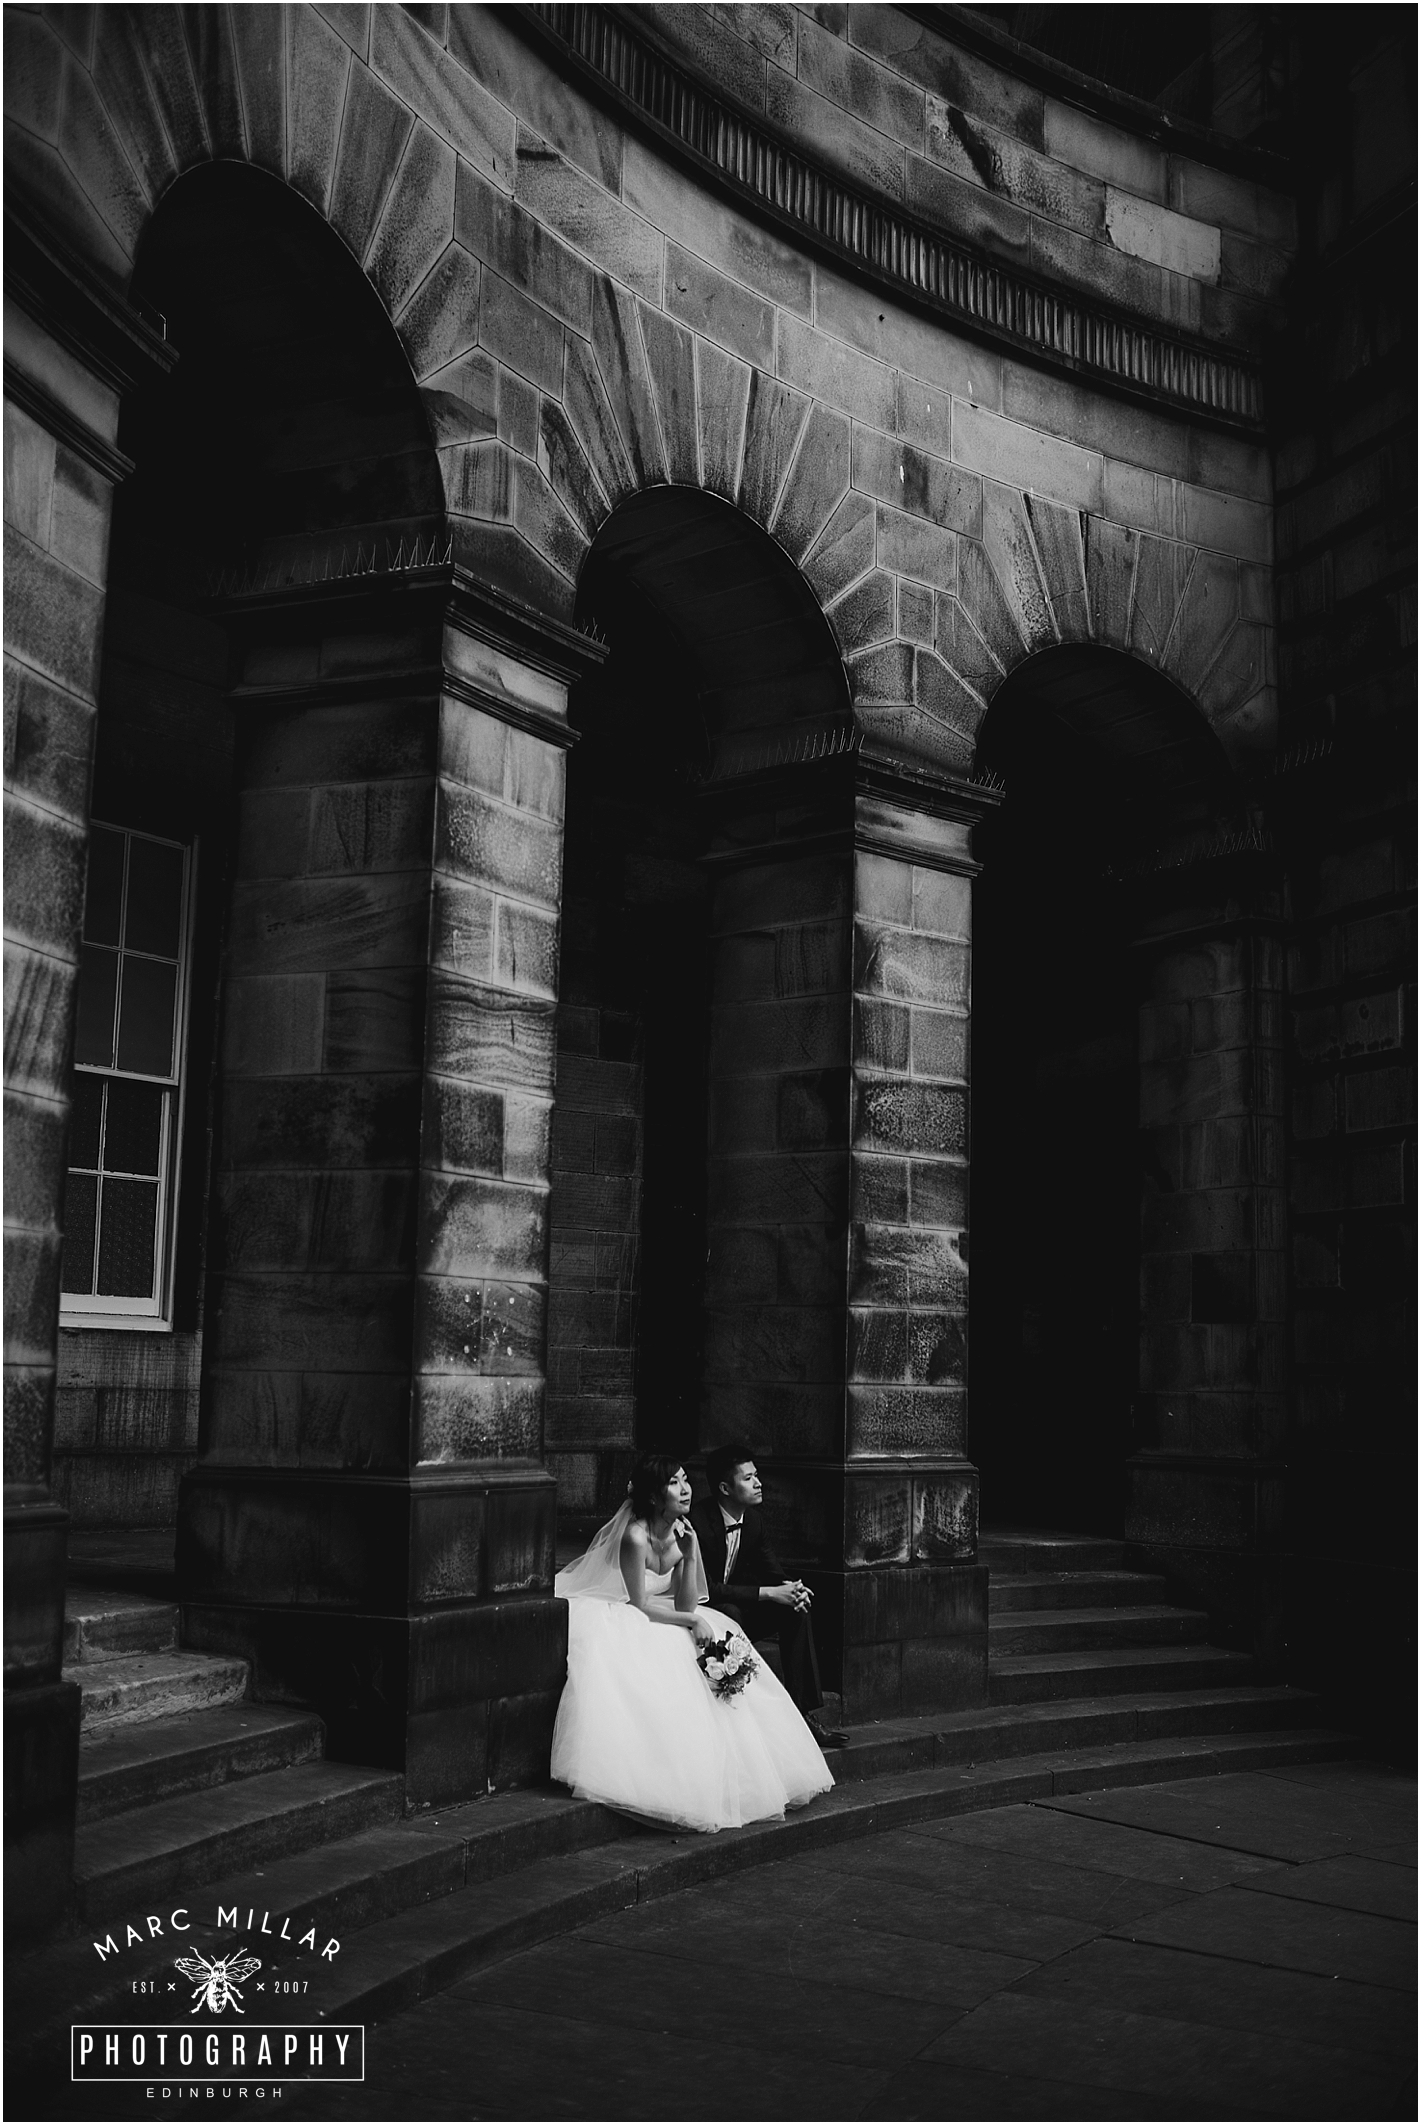  Marc Millar Wedding Photography 